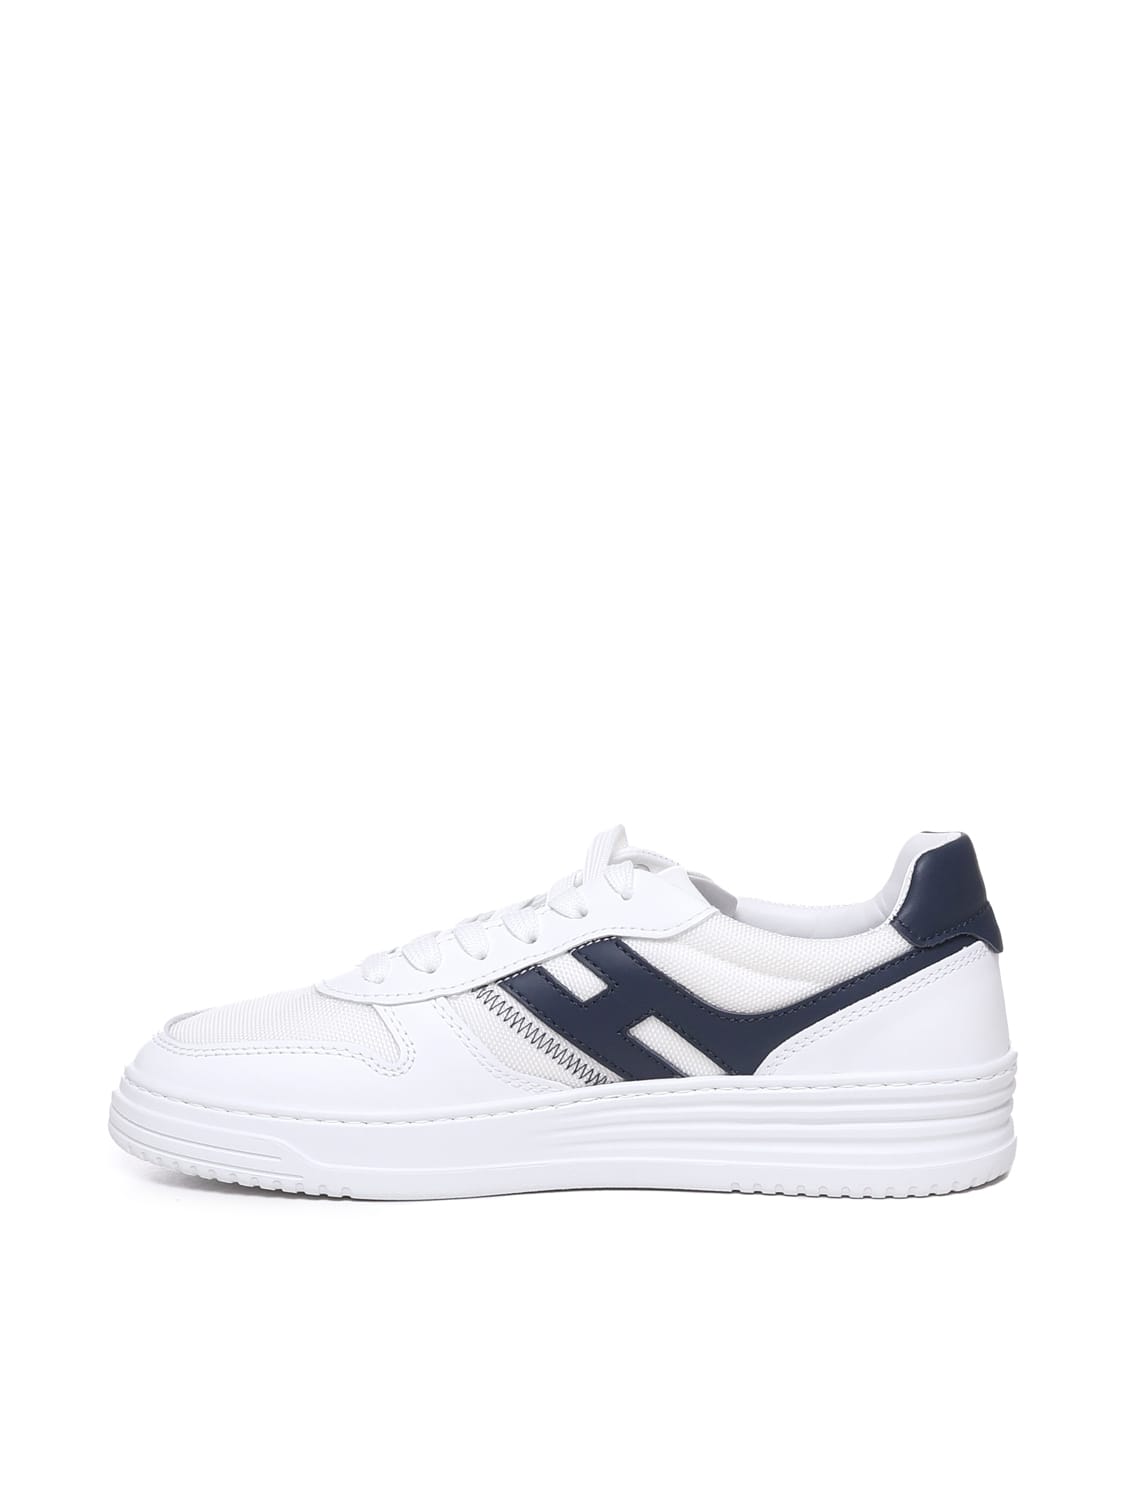 Shop Hogan H630 Sneakers In White, Blue